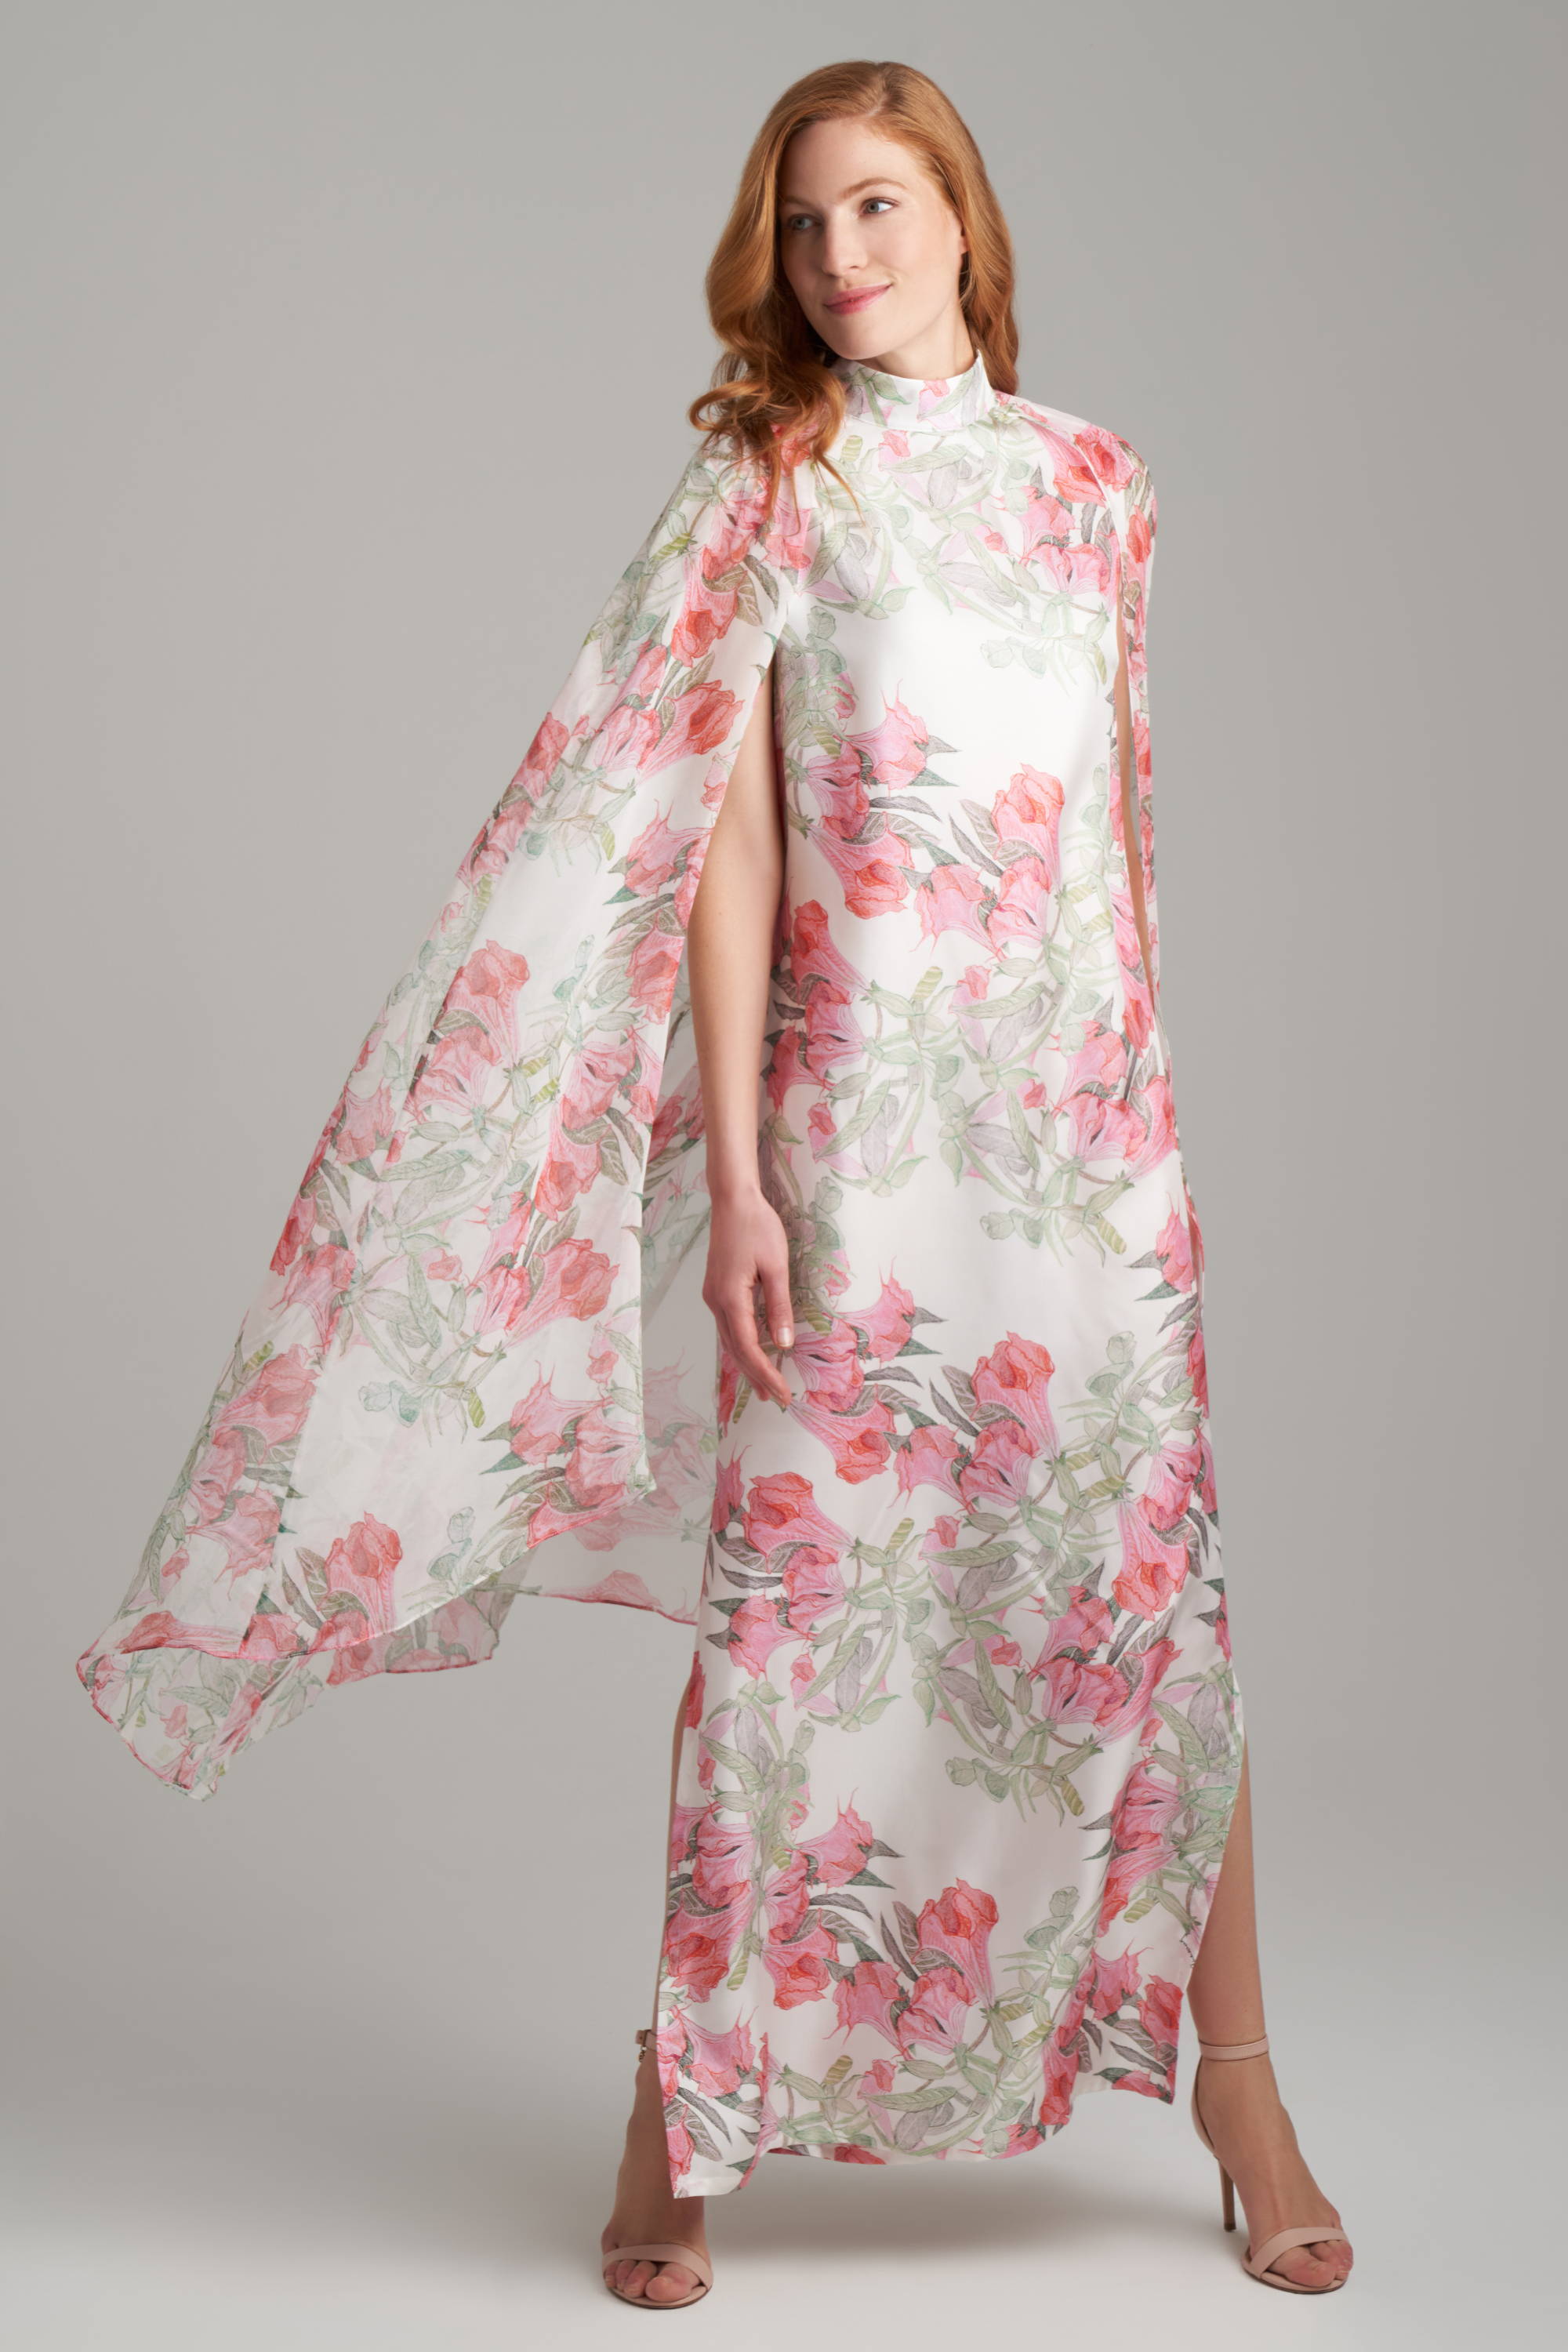 Woman wearing formal silk floral printed dress by Ala von Auersperg